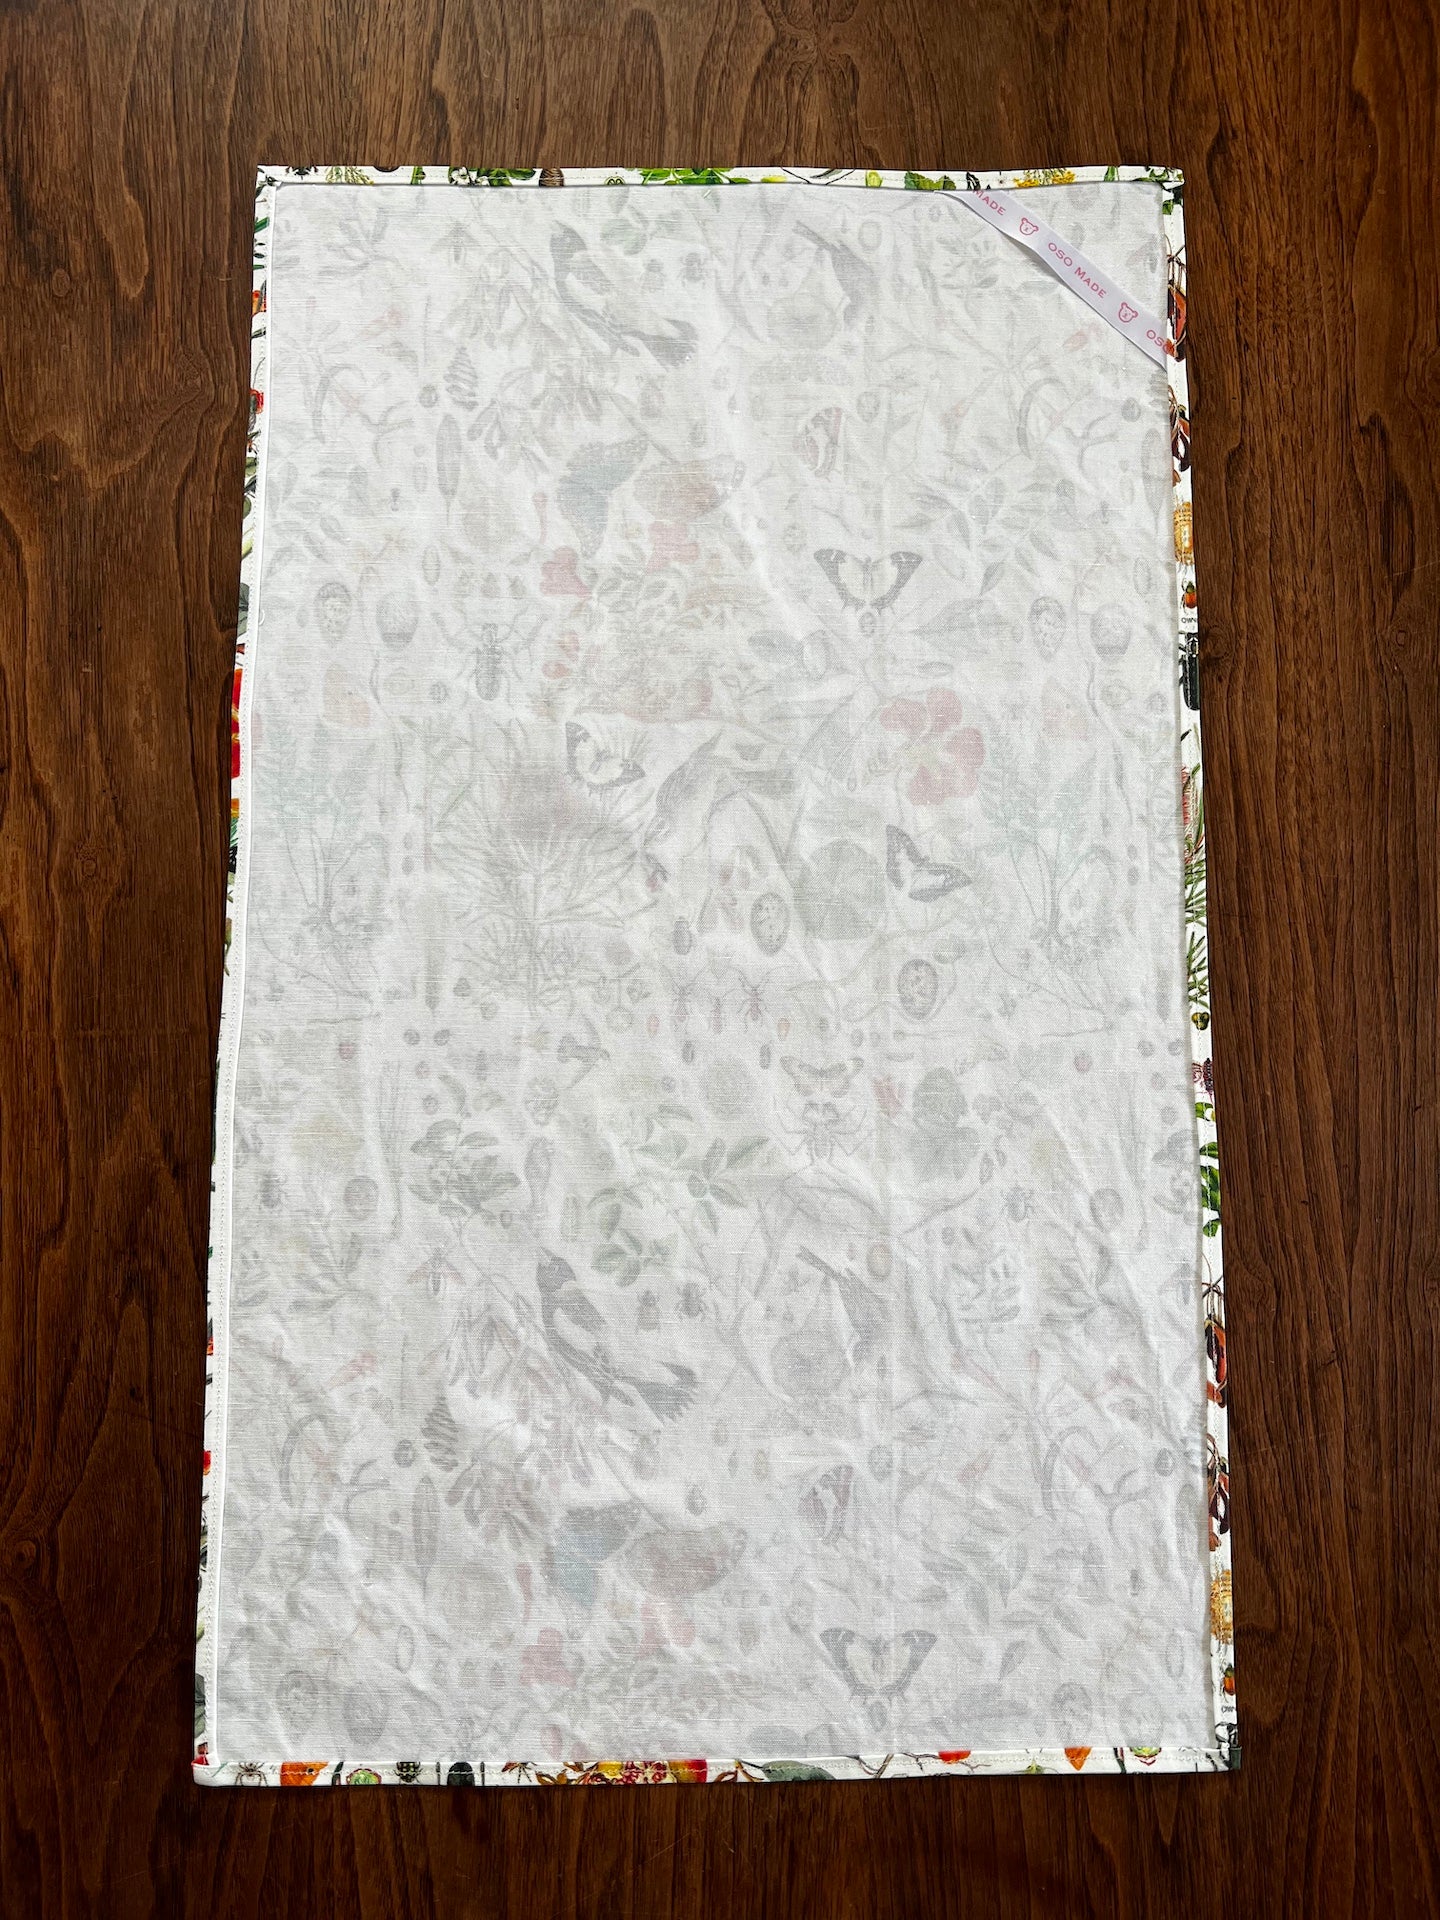 Natural World Tea Towel, 26" x16", botanist kitchen towel, Hostess gift, gift for bartender, natural world linen bar towel.